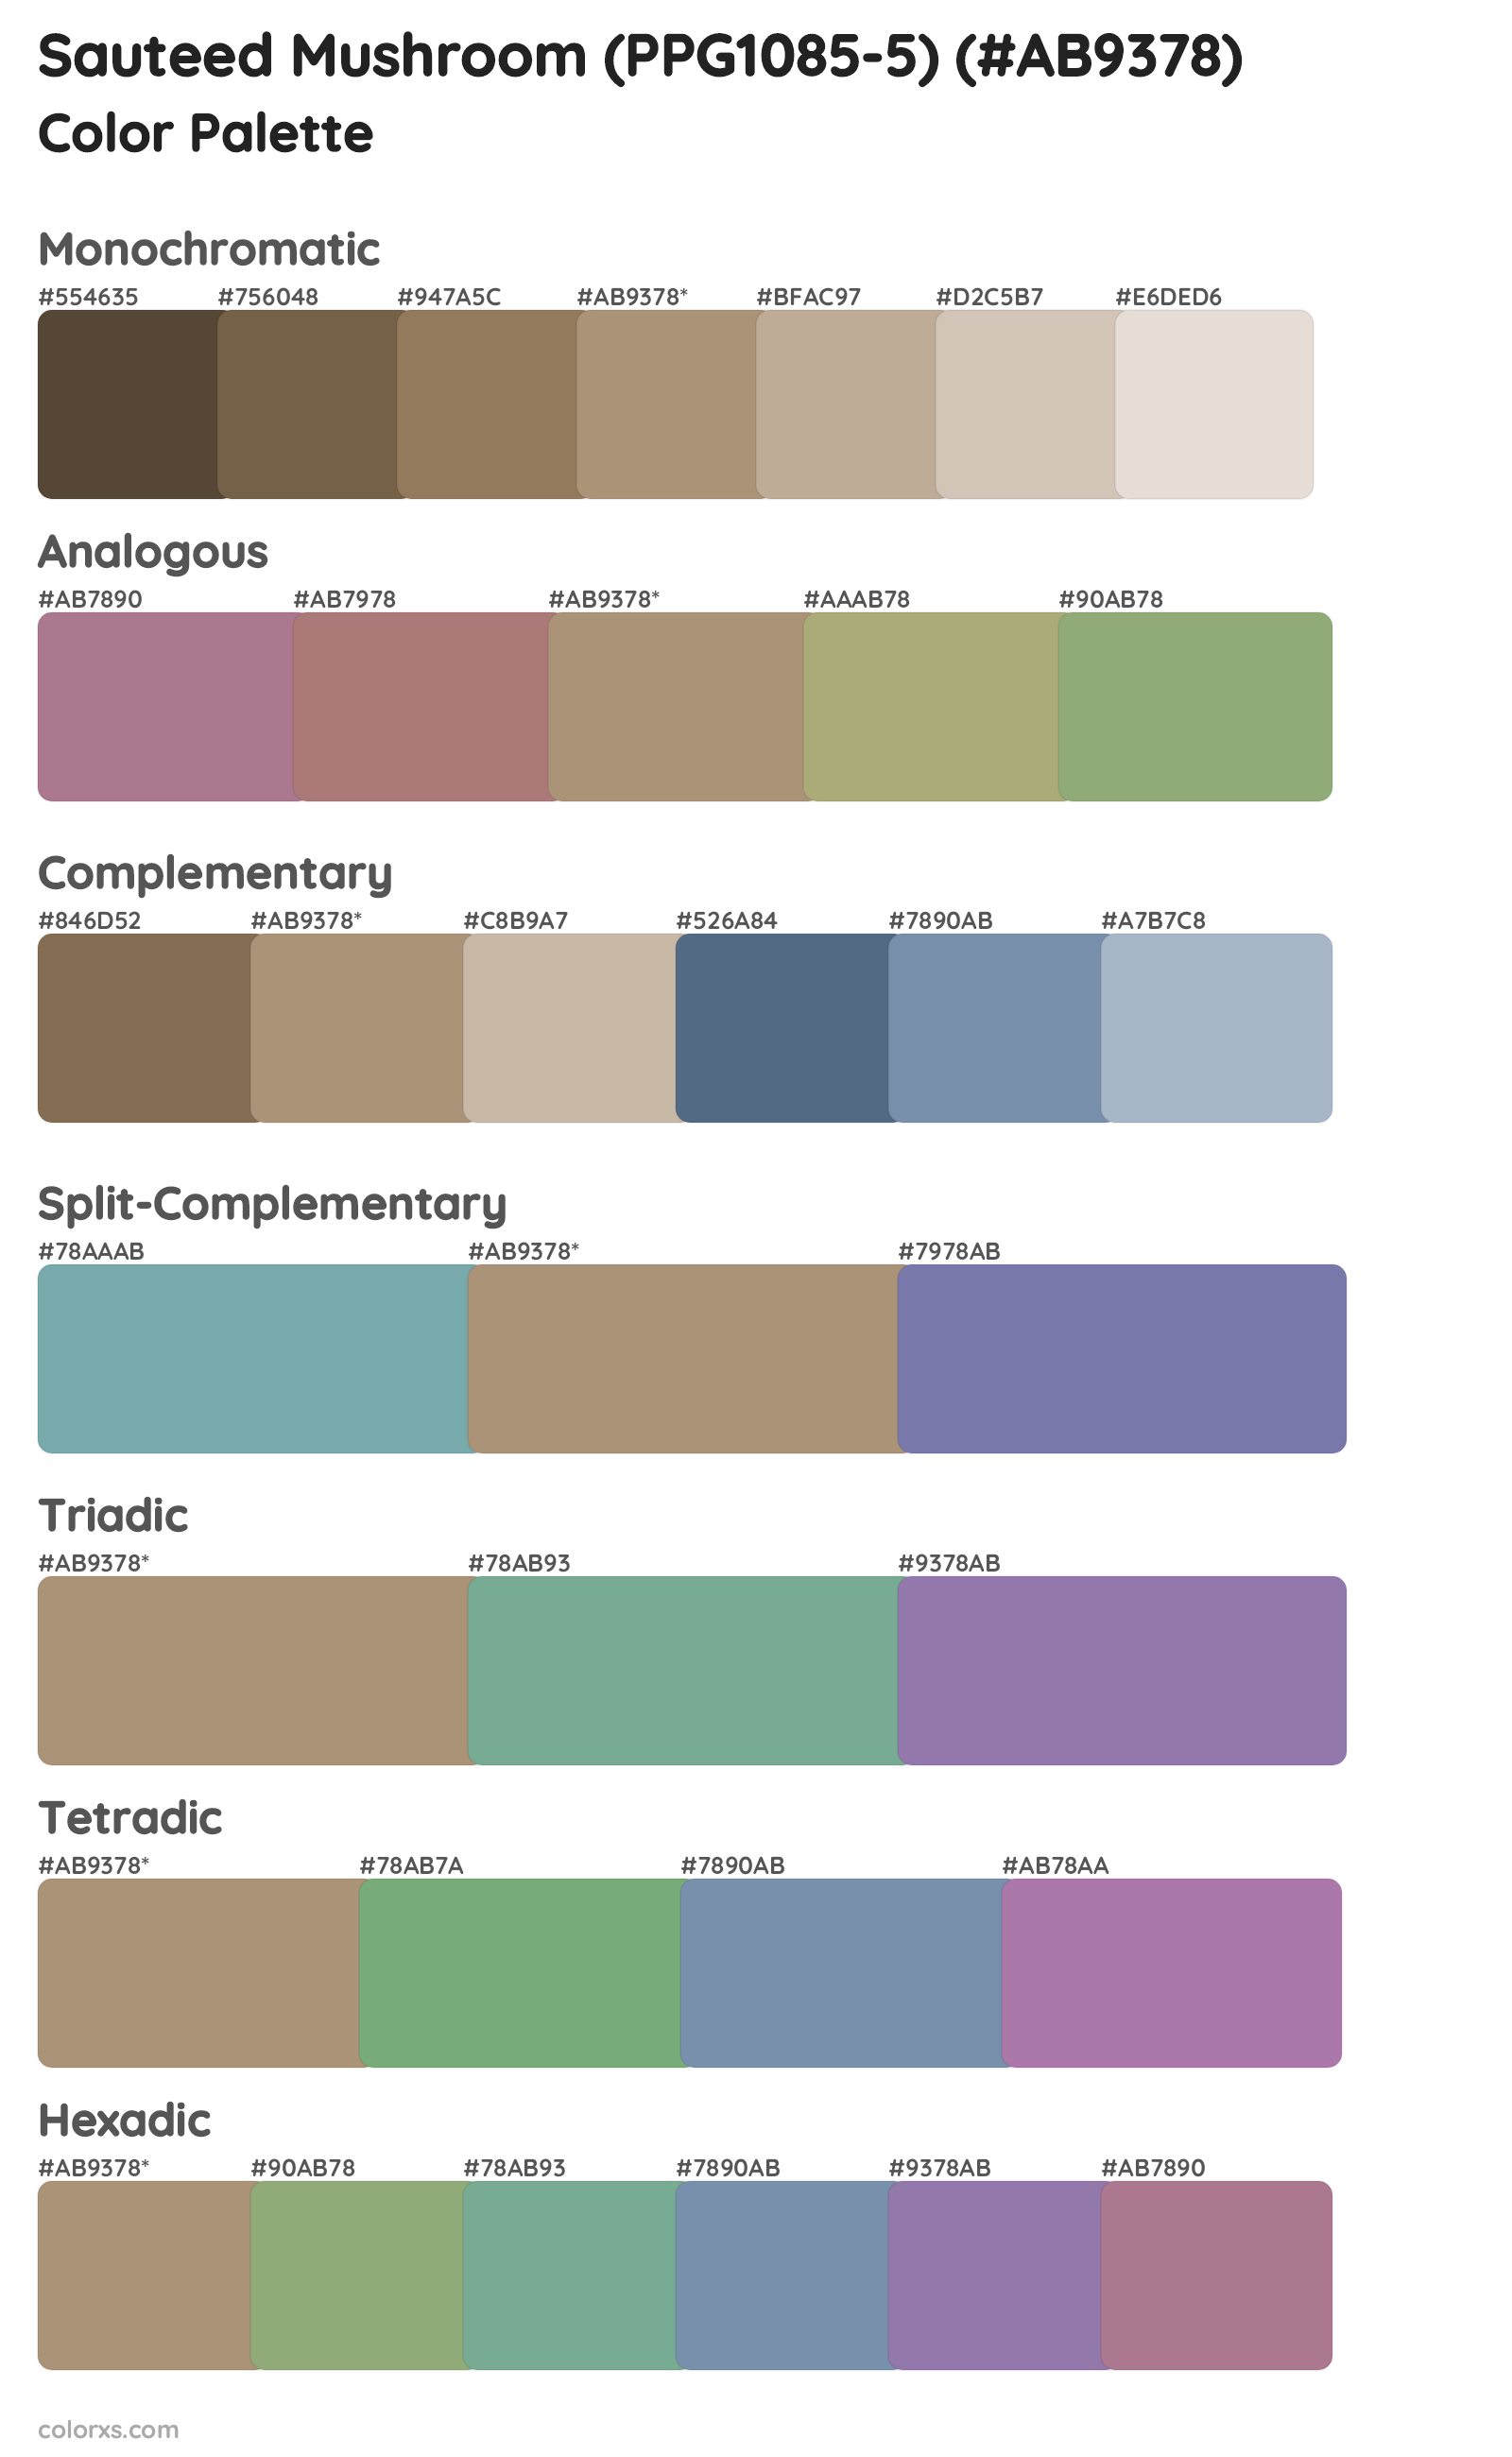 Sauteed Mushroom (PPG1085-5) Color Scheme Palettes